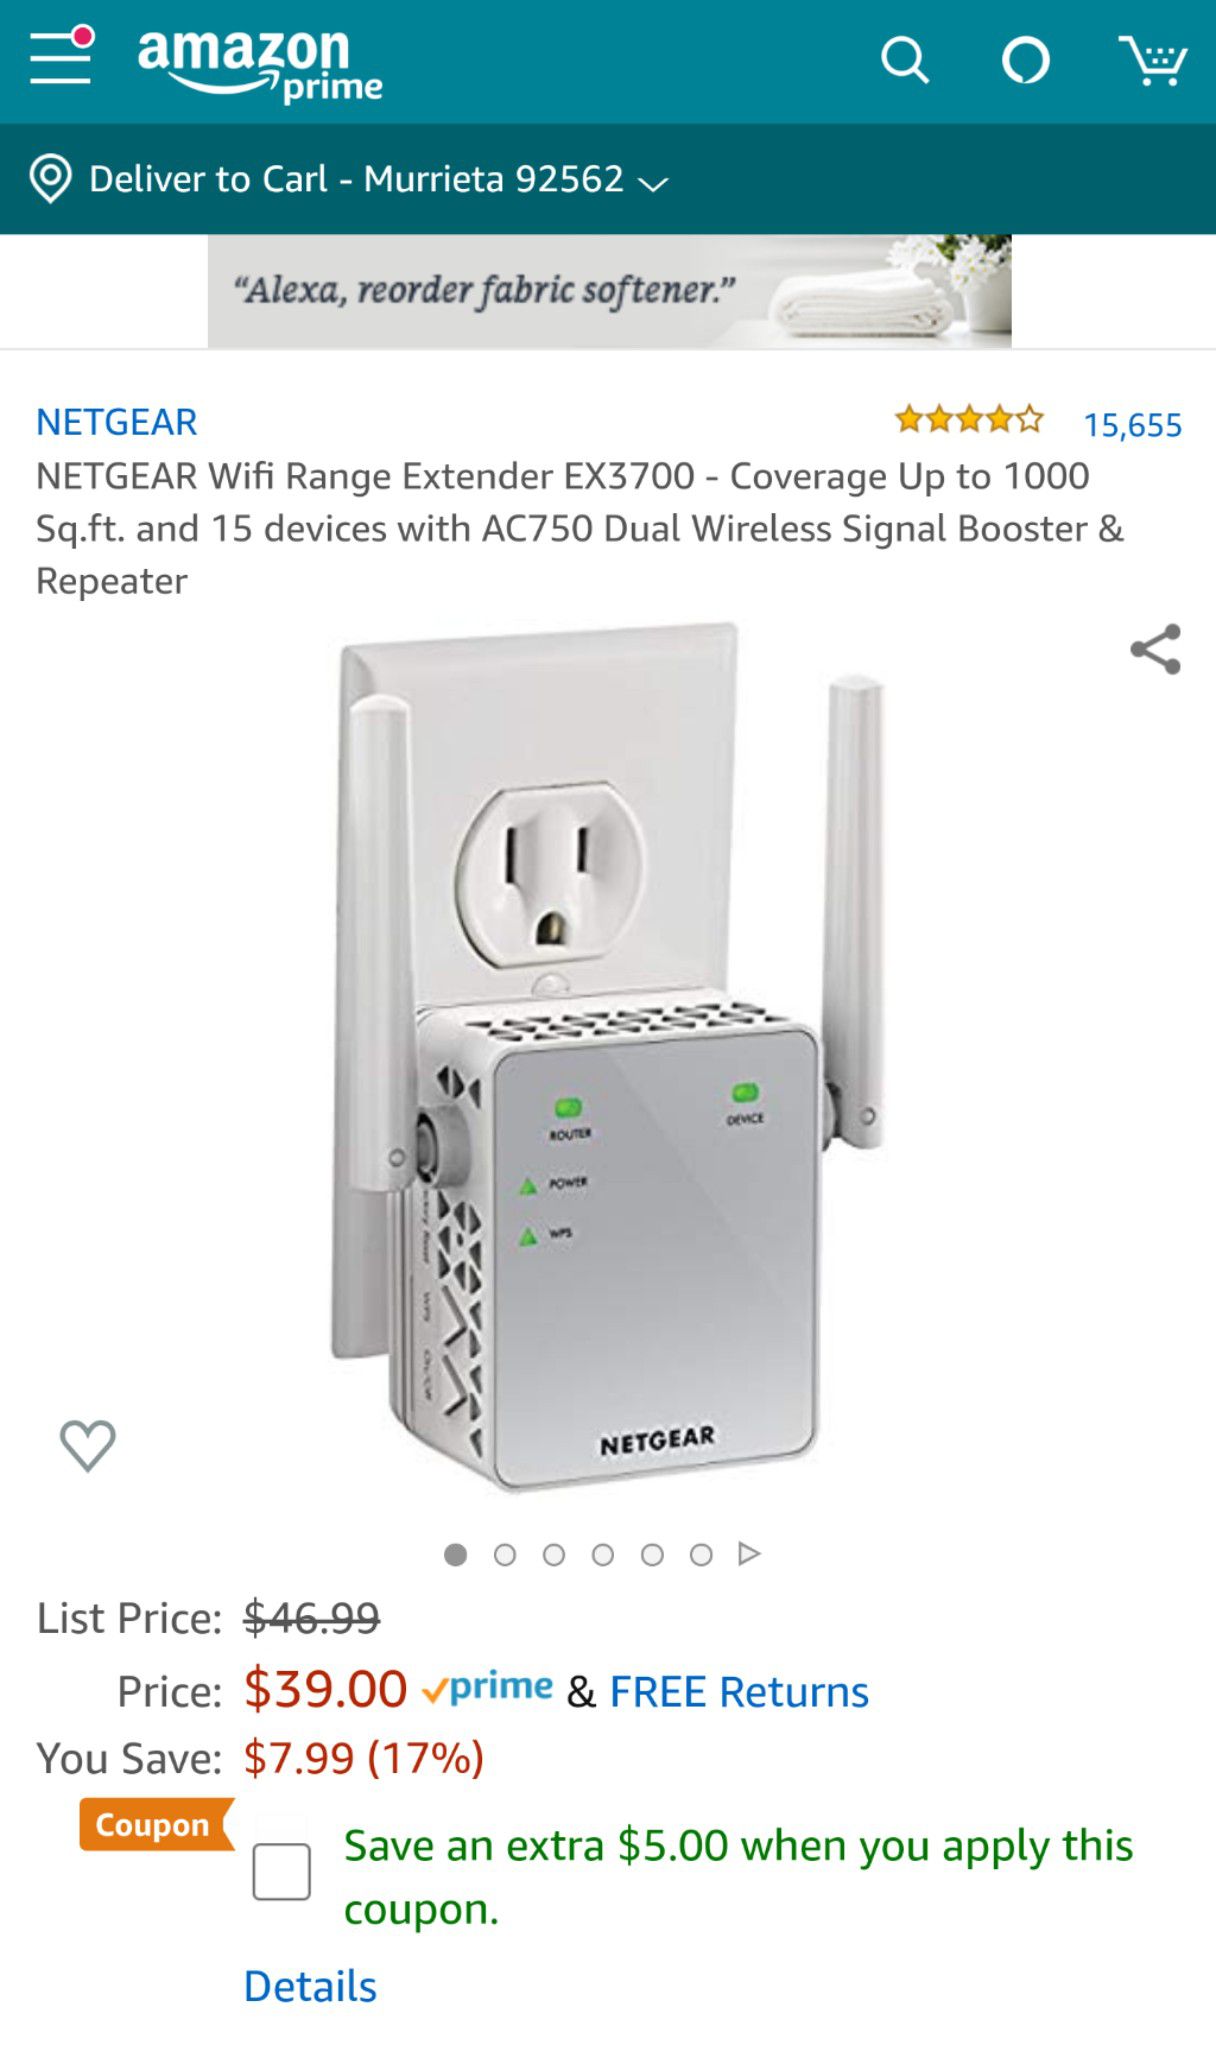 NETGEAR Wifi Range Extender